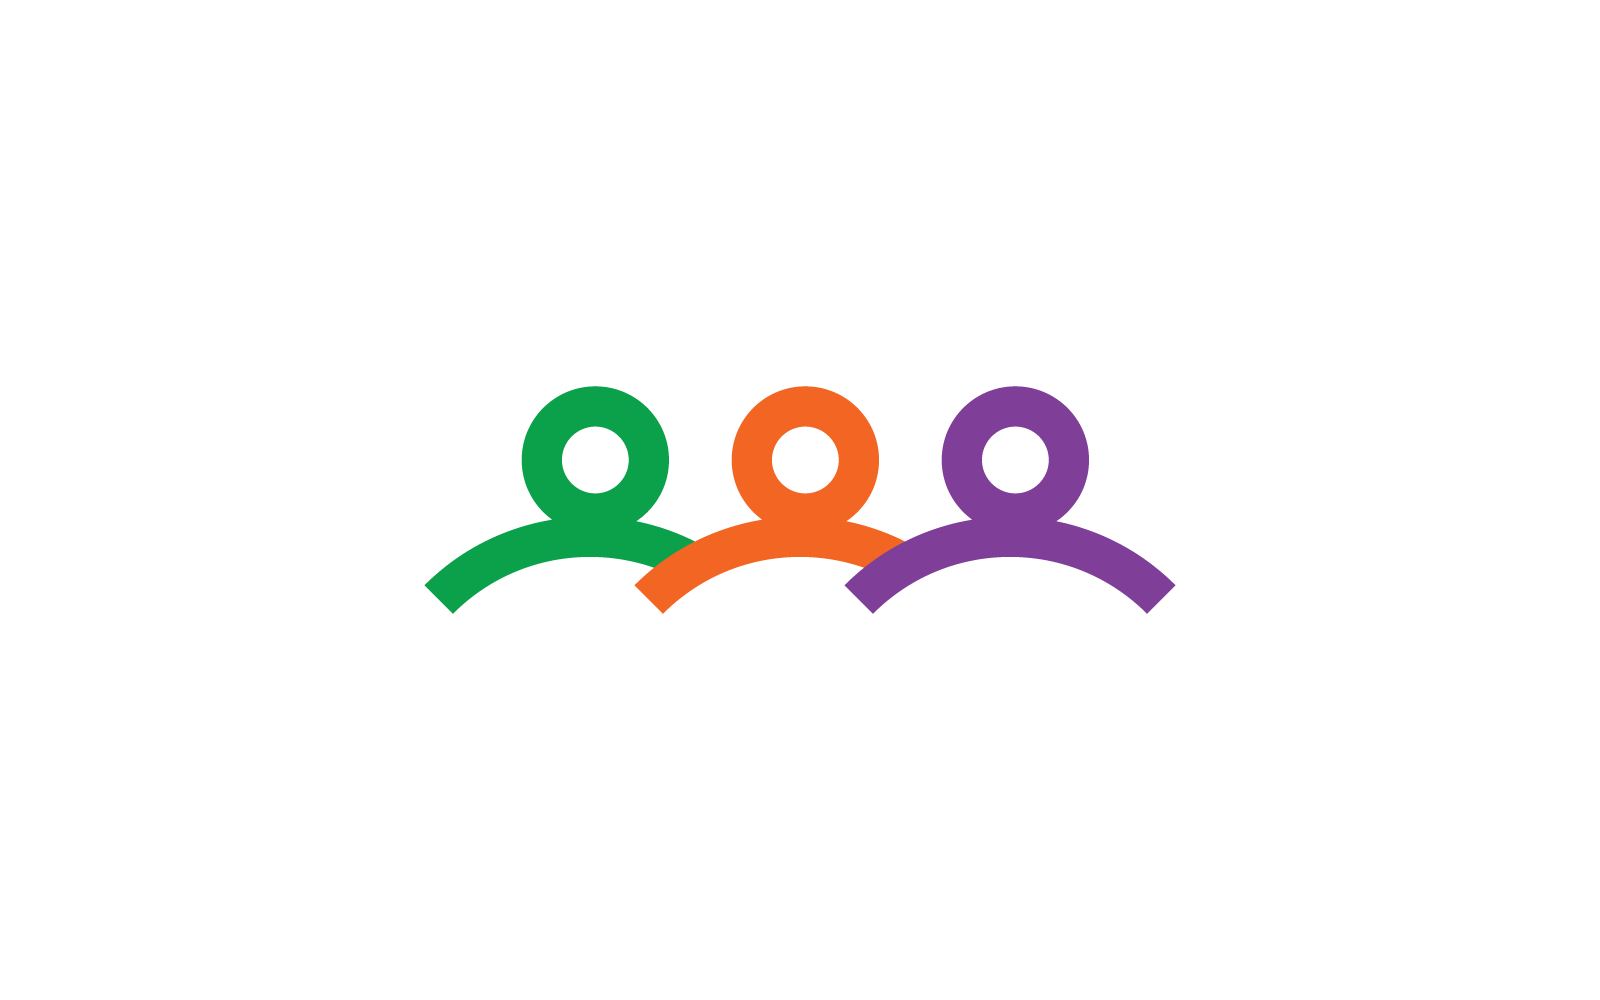 Disability logo, family care, or Community care logo design Logo Template